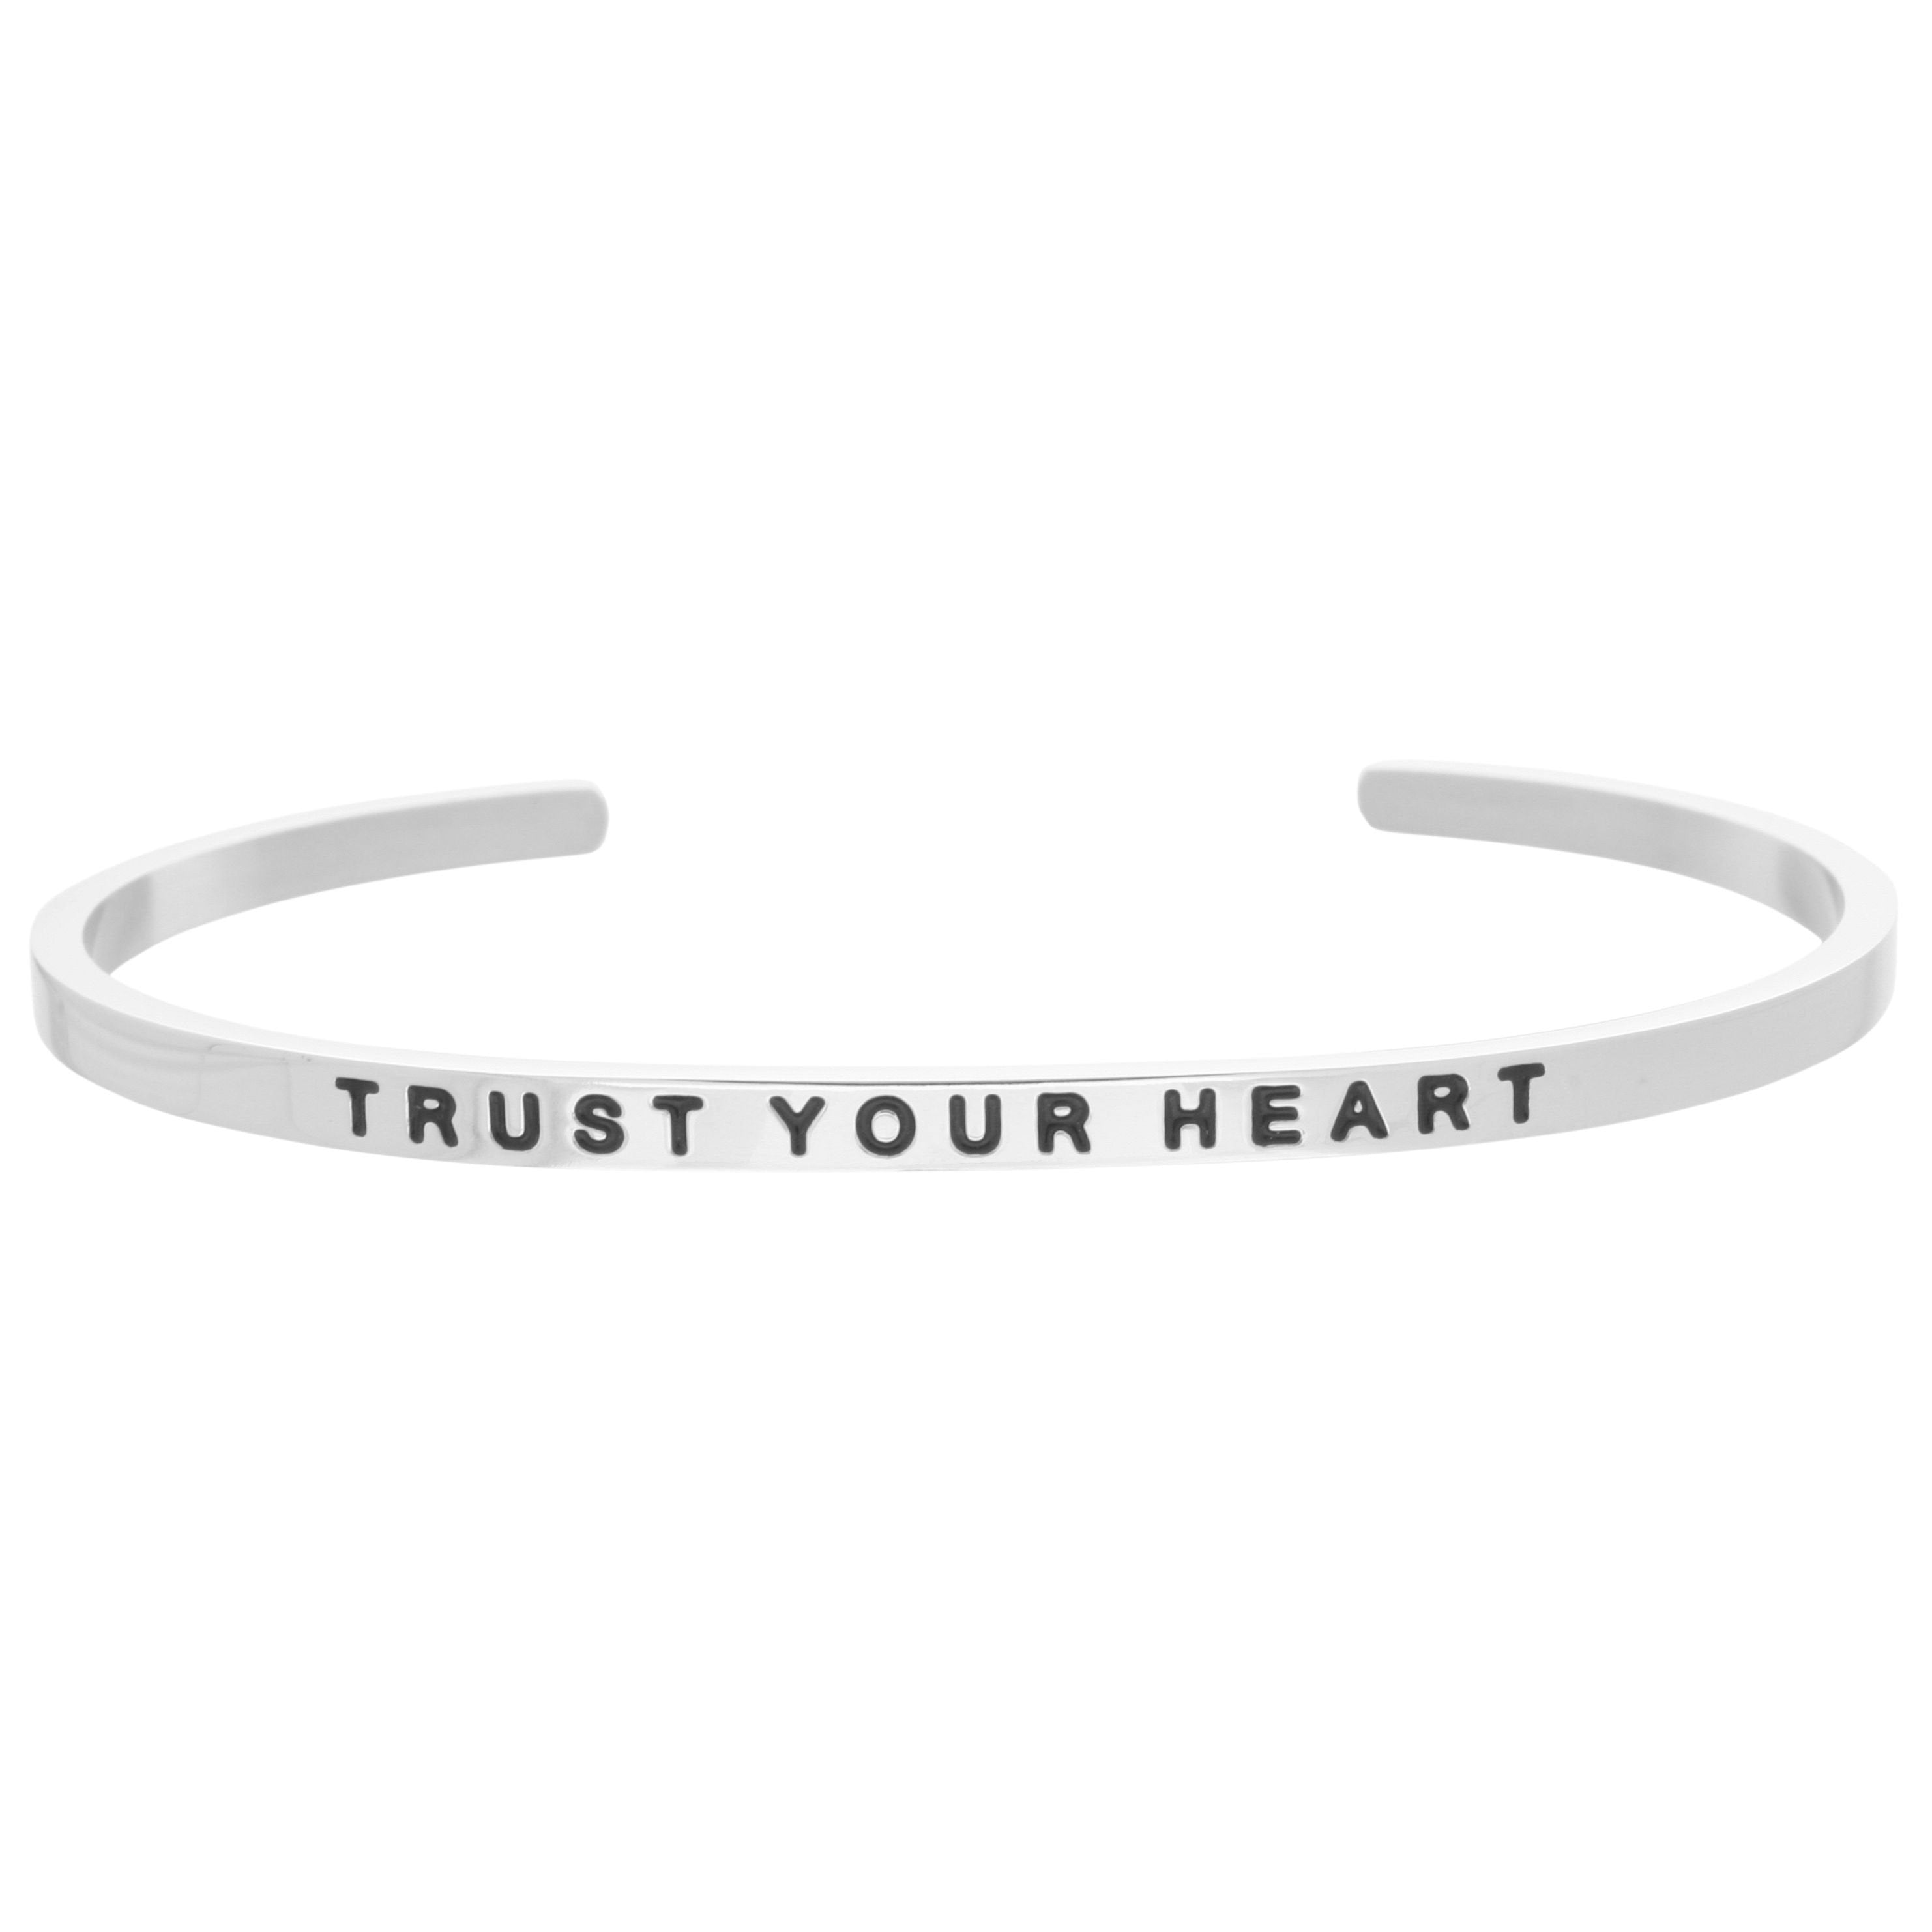 TRUST YOUR HEART Bracelet - Stainless Steel Trust Your Heart Message Bangle Stacking Bracelet